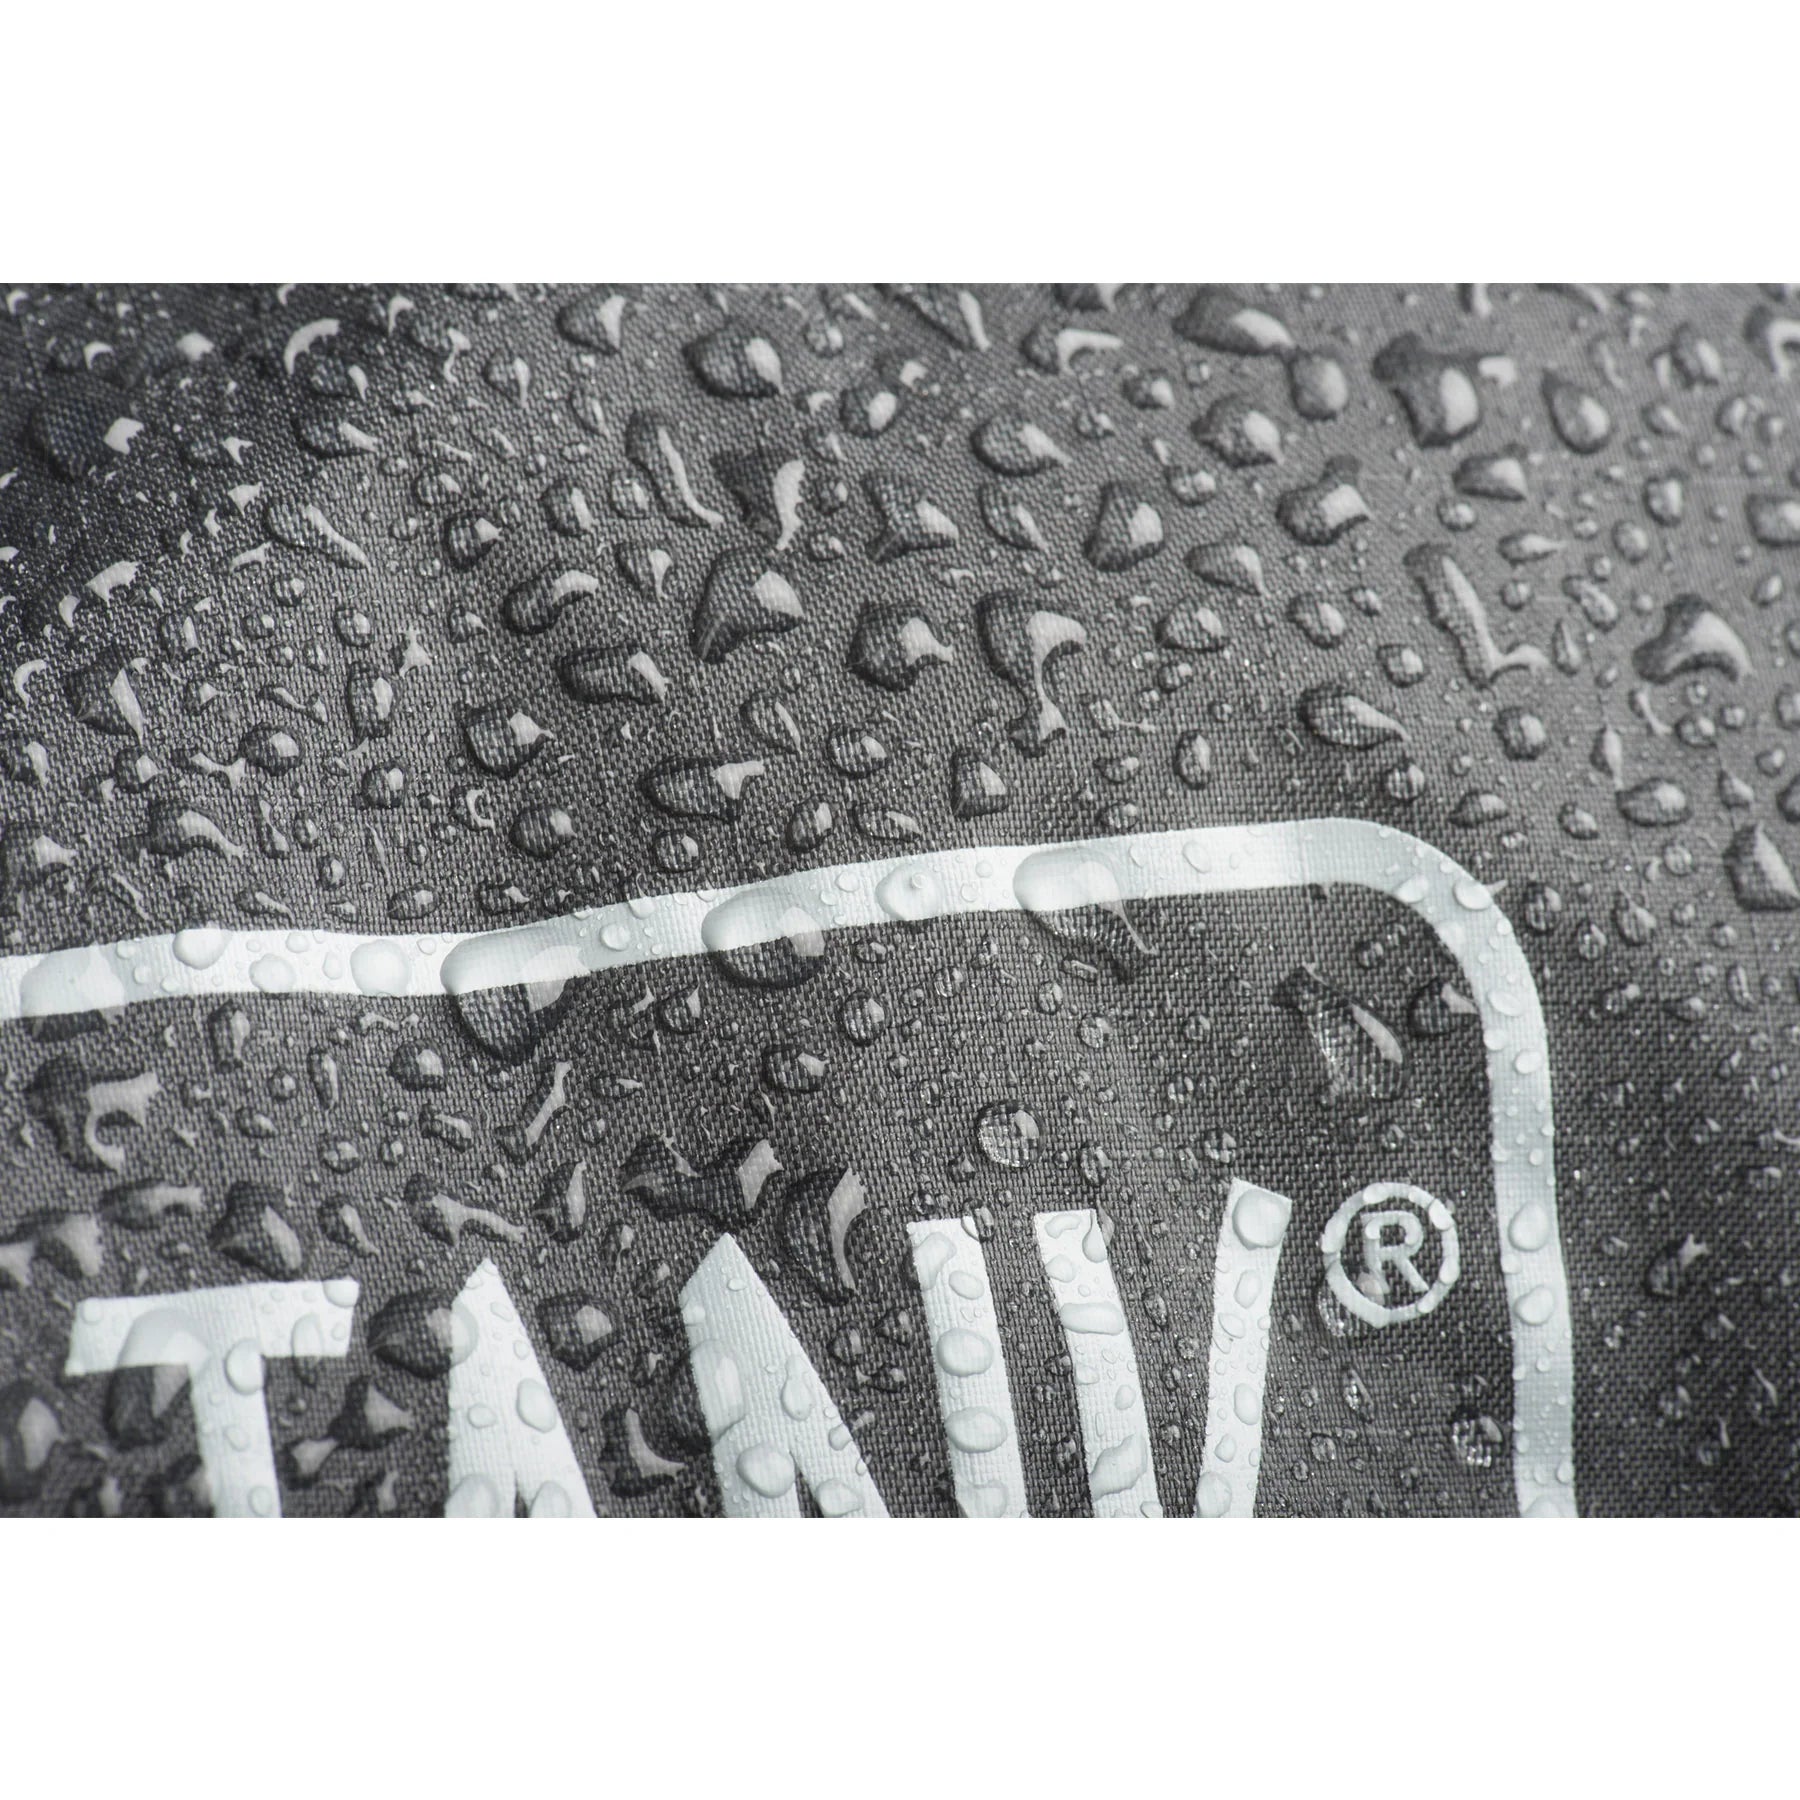 Think Tank Hydrophobia 300-600 V3.0 Rain Cover for DSLR Mirrorless